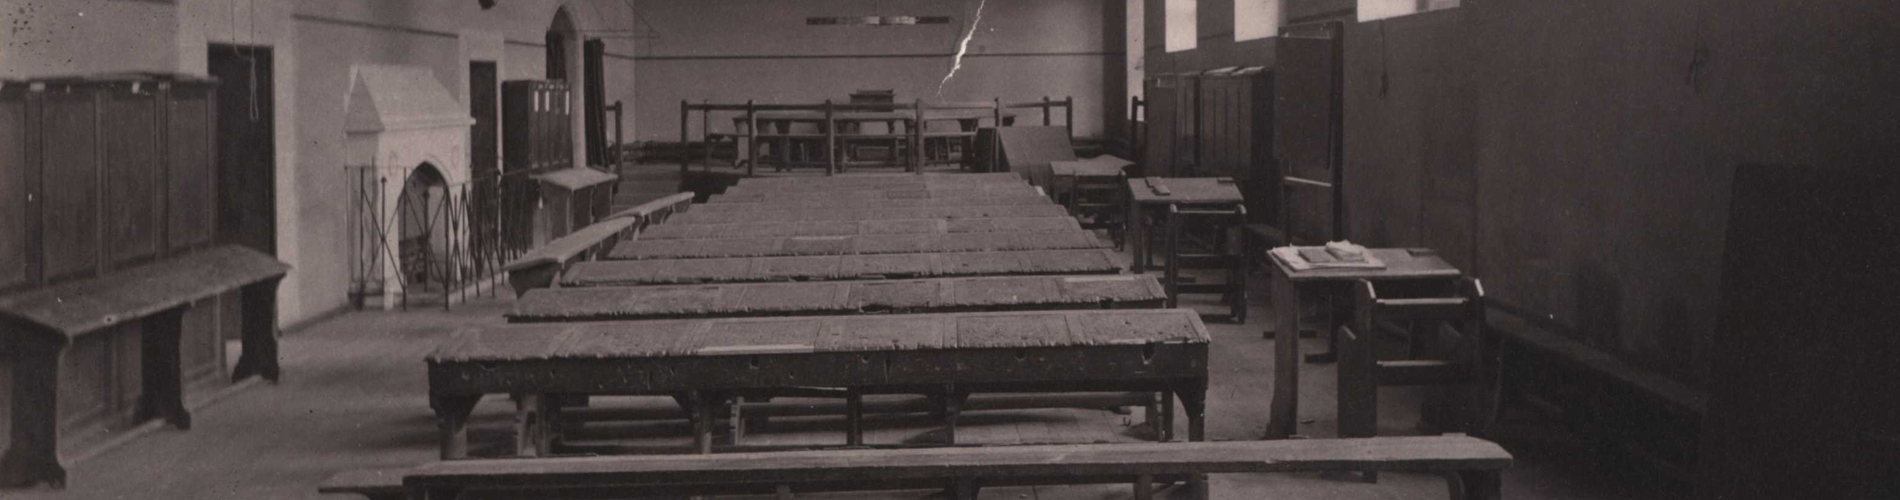 Classroom 1871-1910